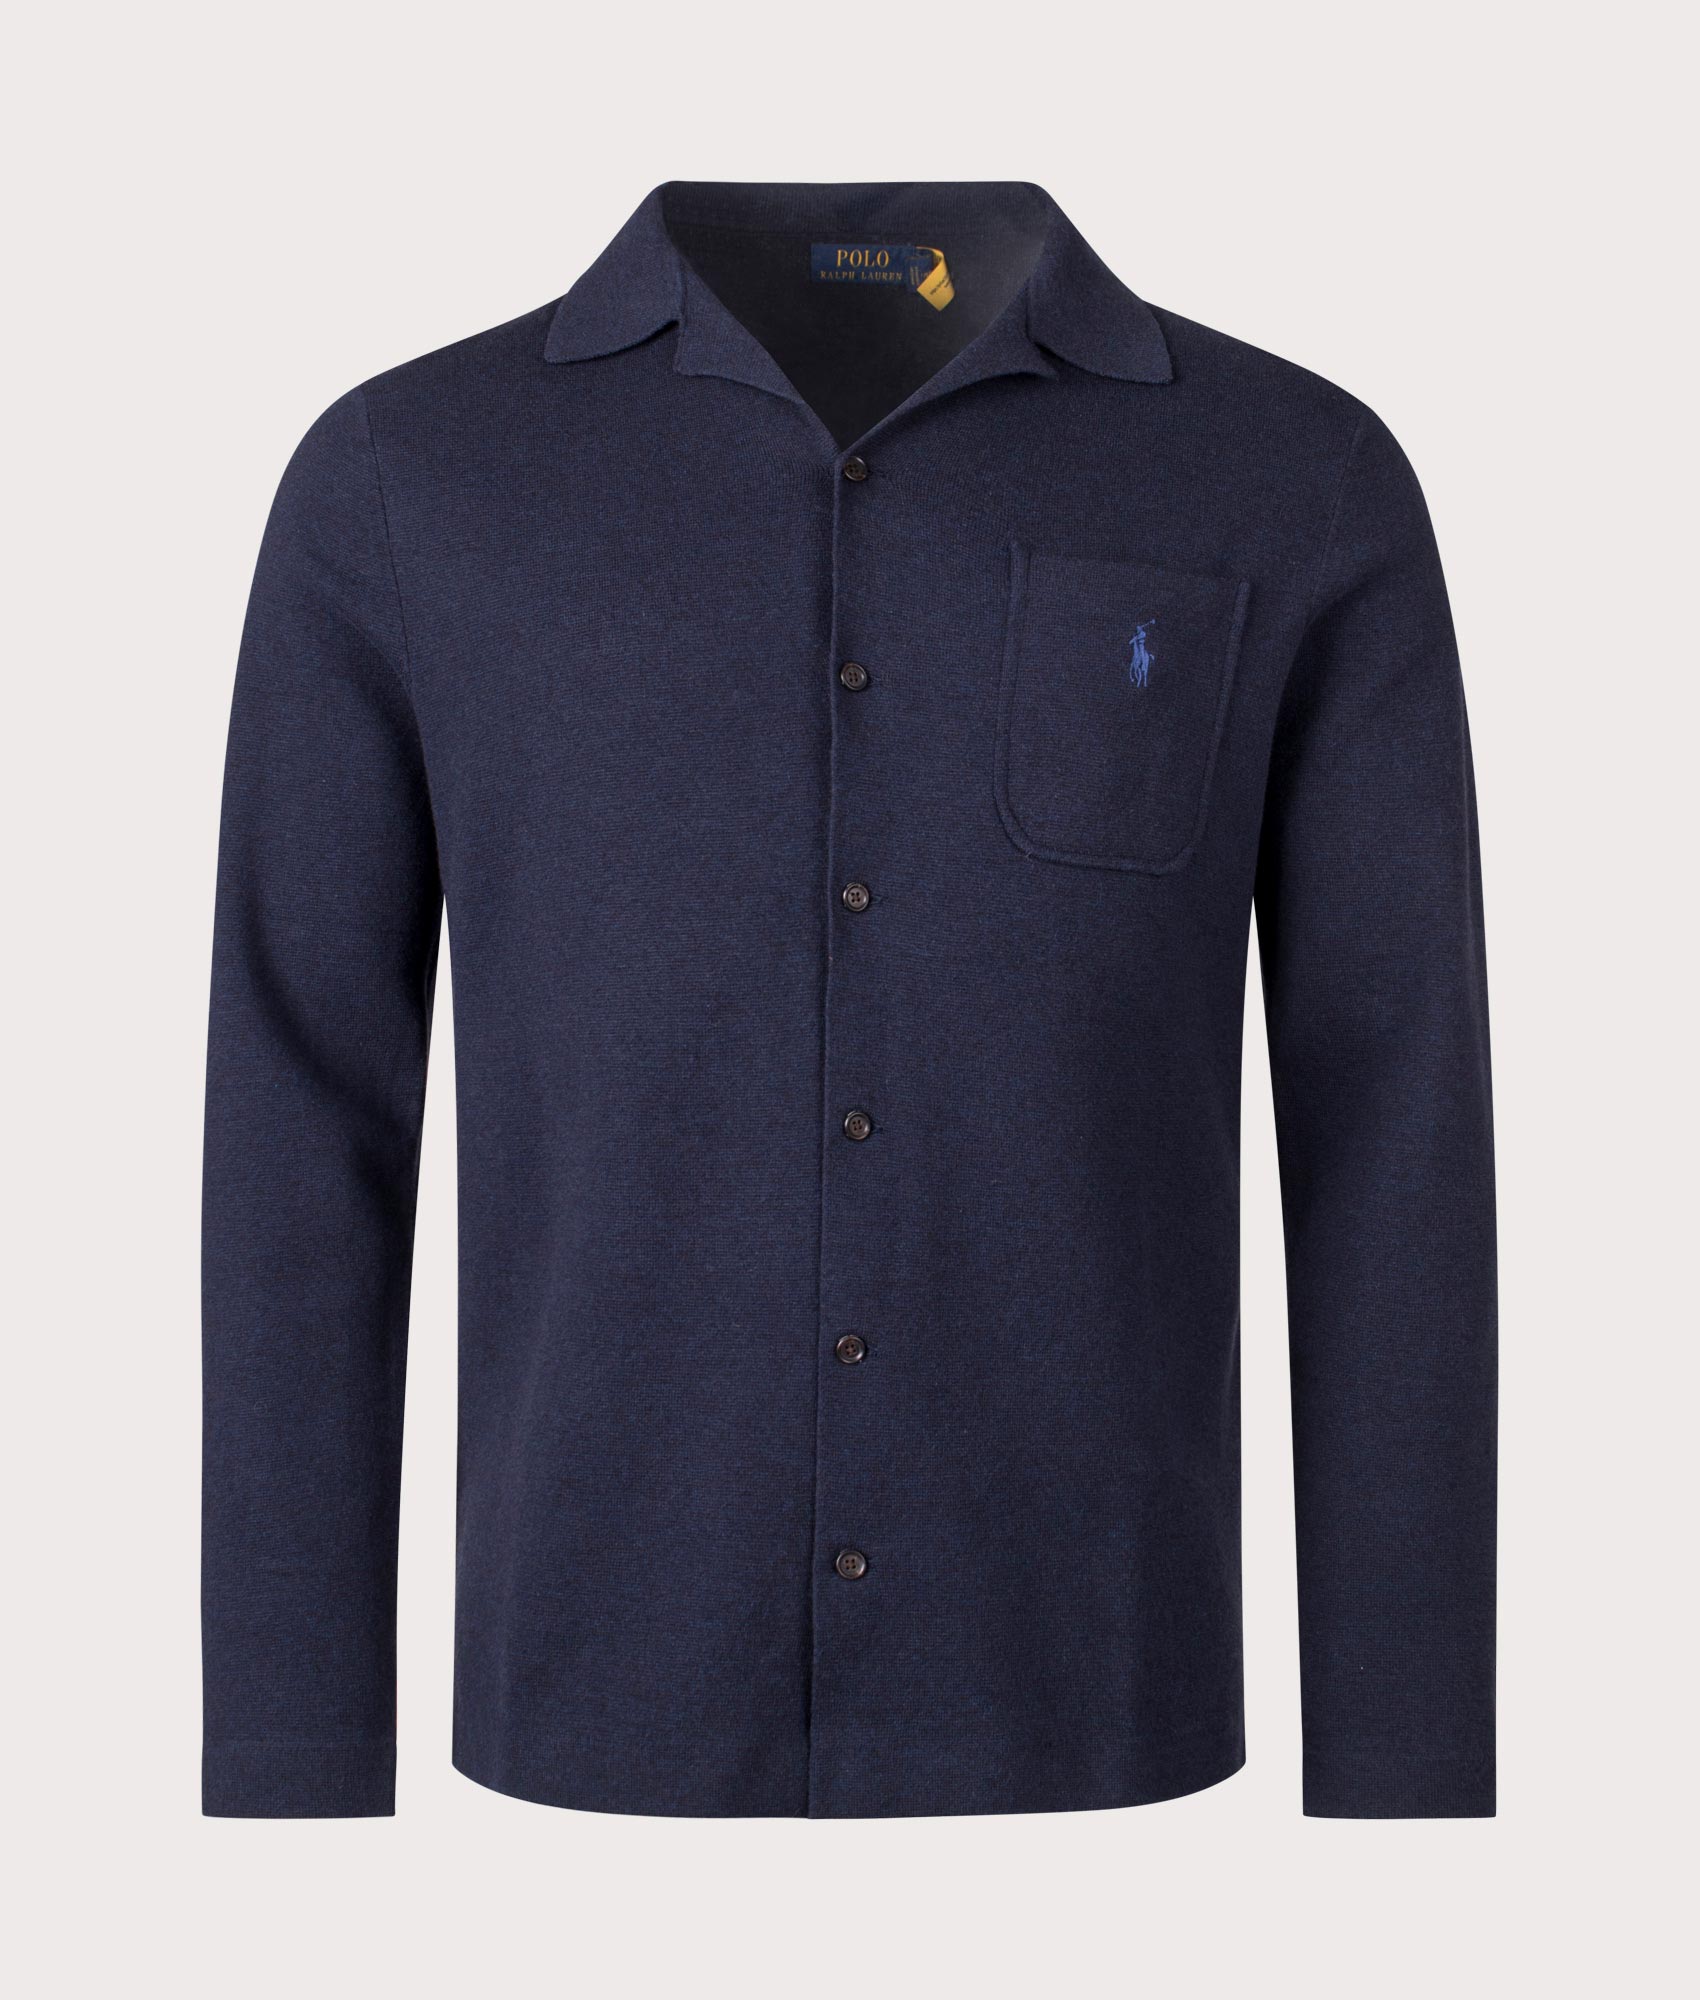 Polo Ralph Lauren Mens Cotton Mesh Shirt - Colour: 001 Navy Heather - Size: XL